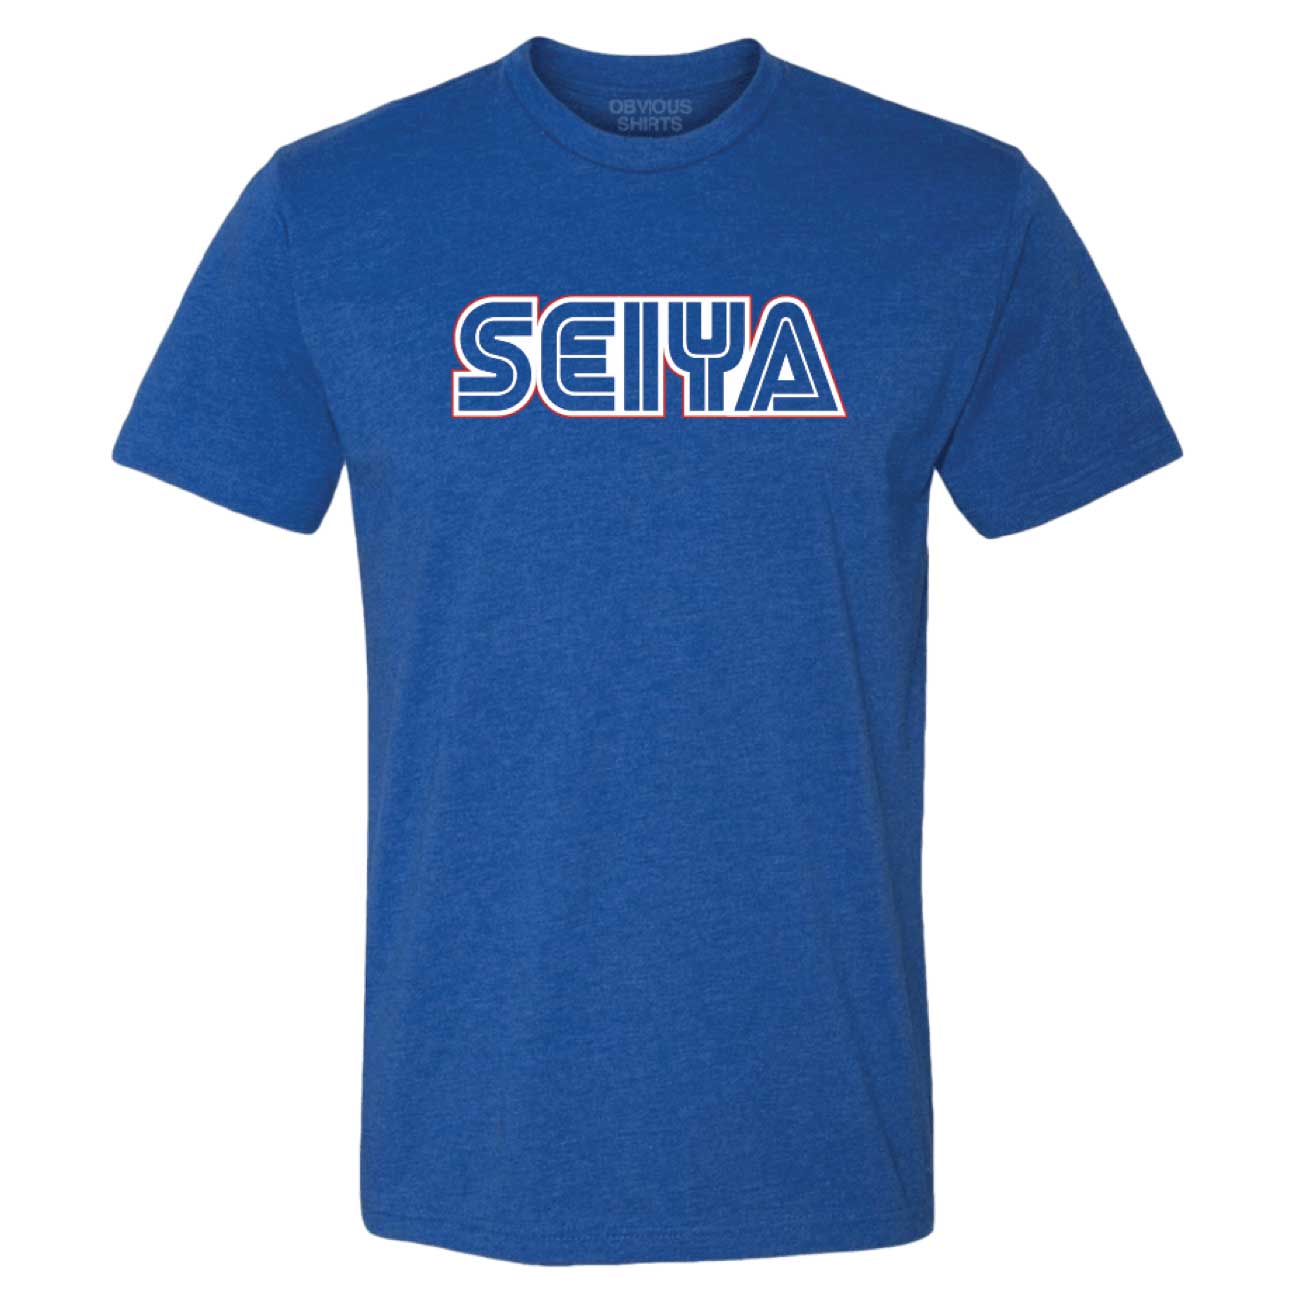 obvious Shirts Chicago Cubs Seiya T-Shirt Small